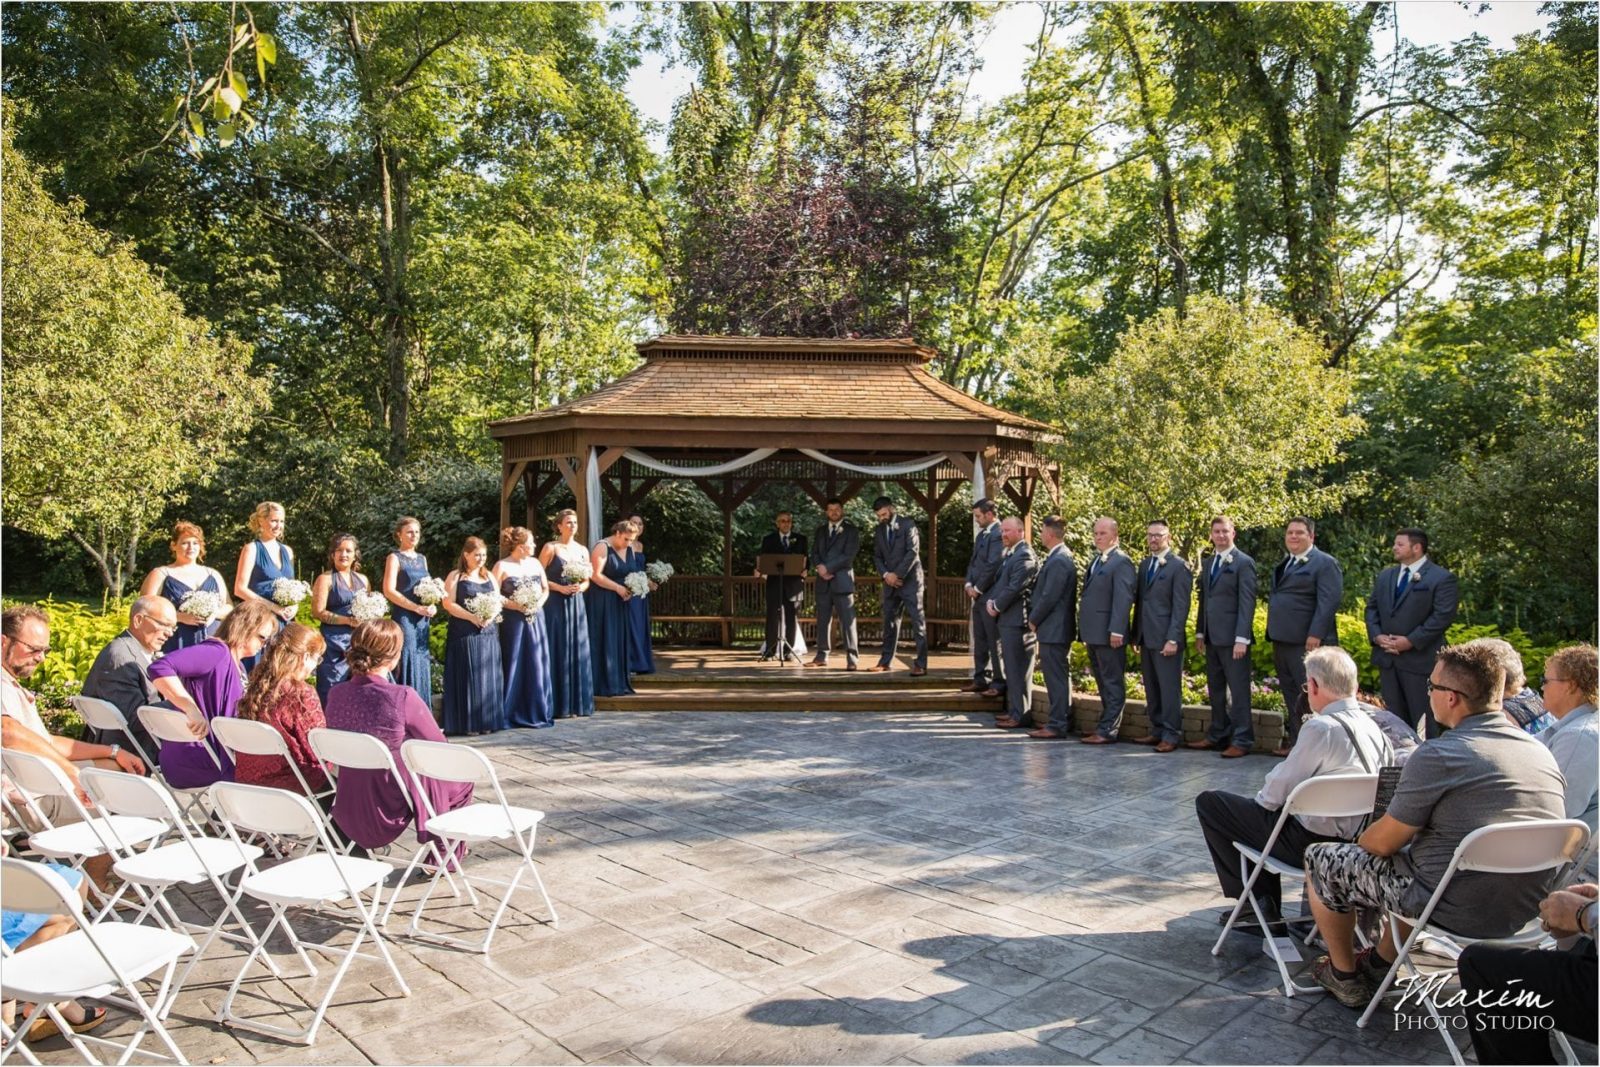 Pattison Park Lodge Wedding Ceremony